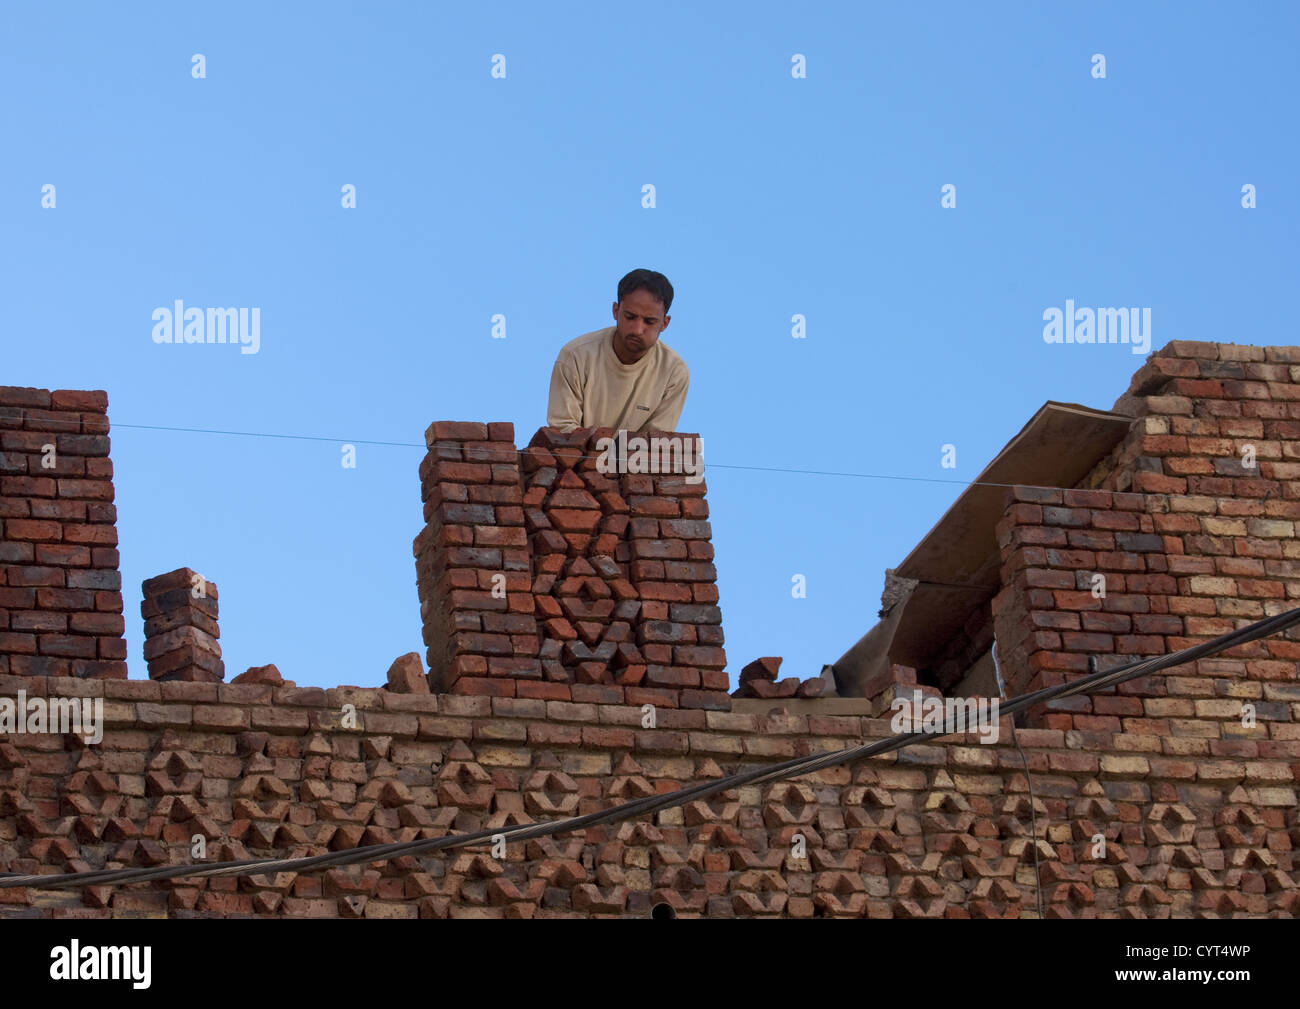 Man Chewing Qat While Adjusting Bricks On A Roof, Sanaa, Yemen Stock Photo